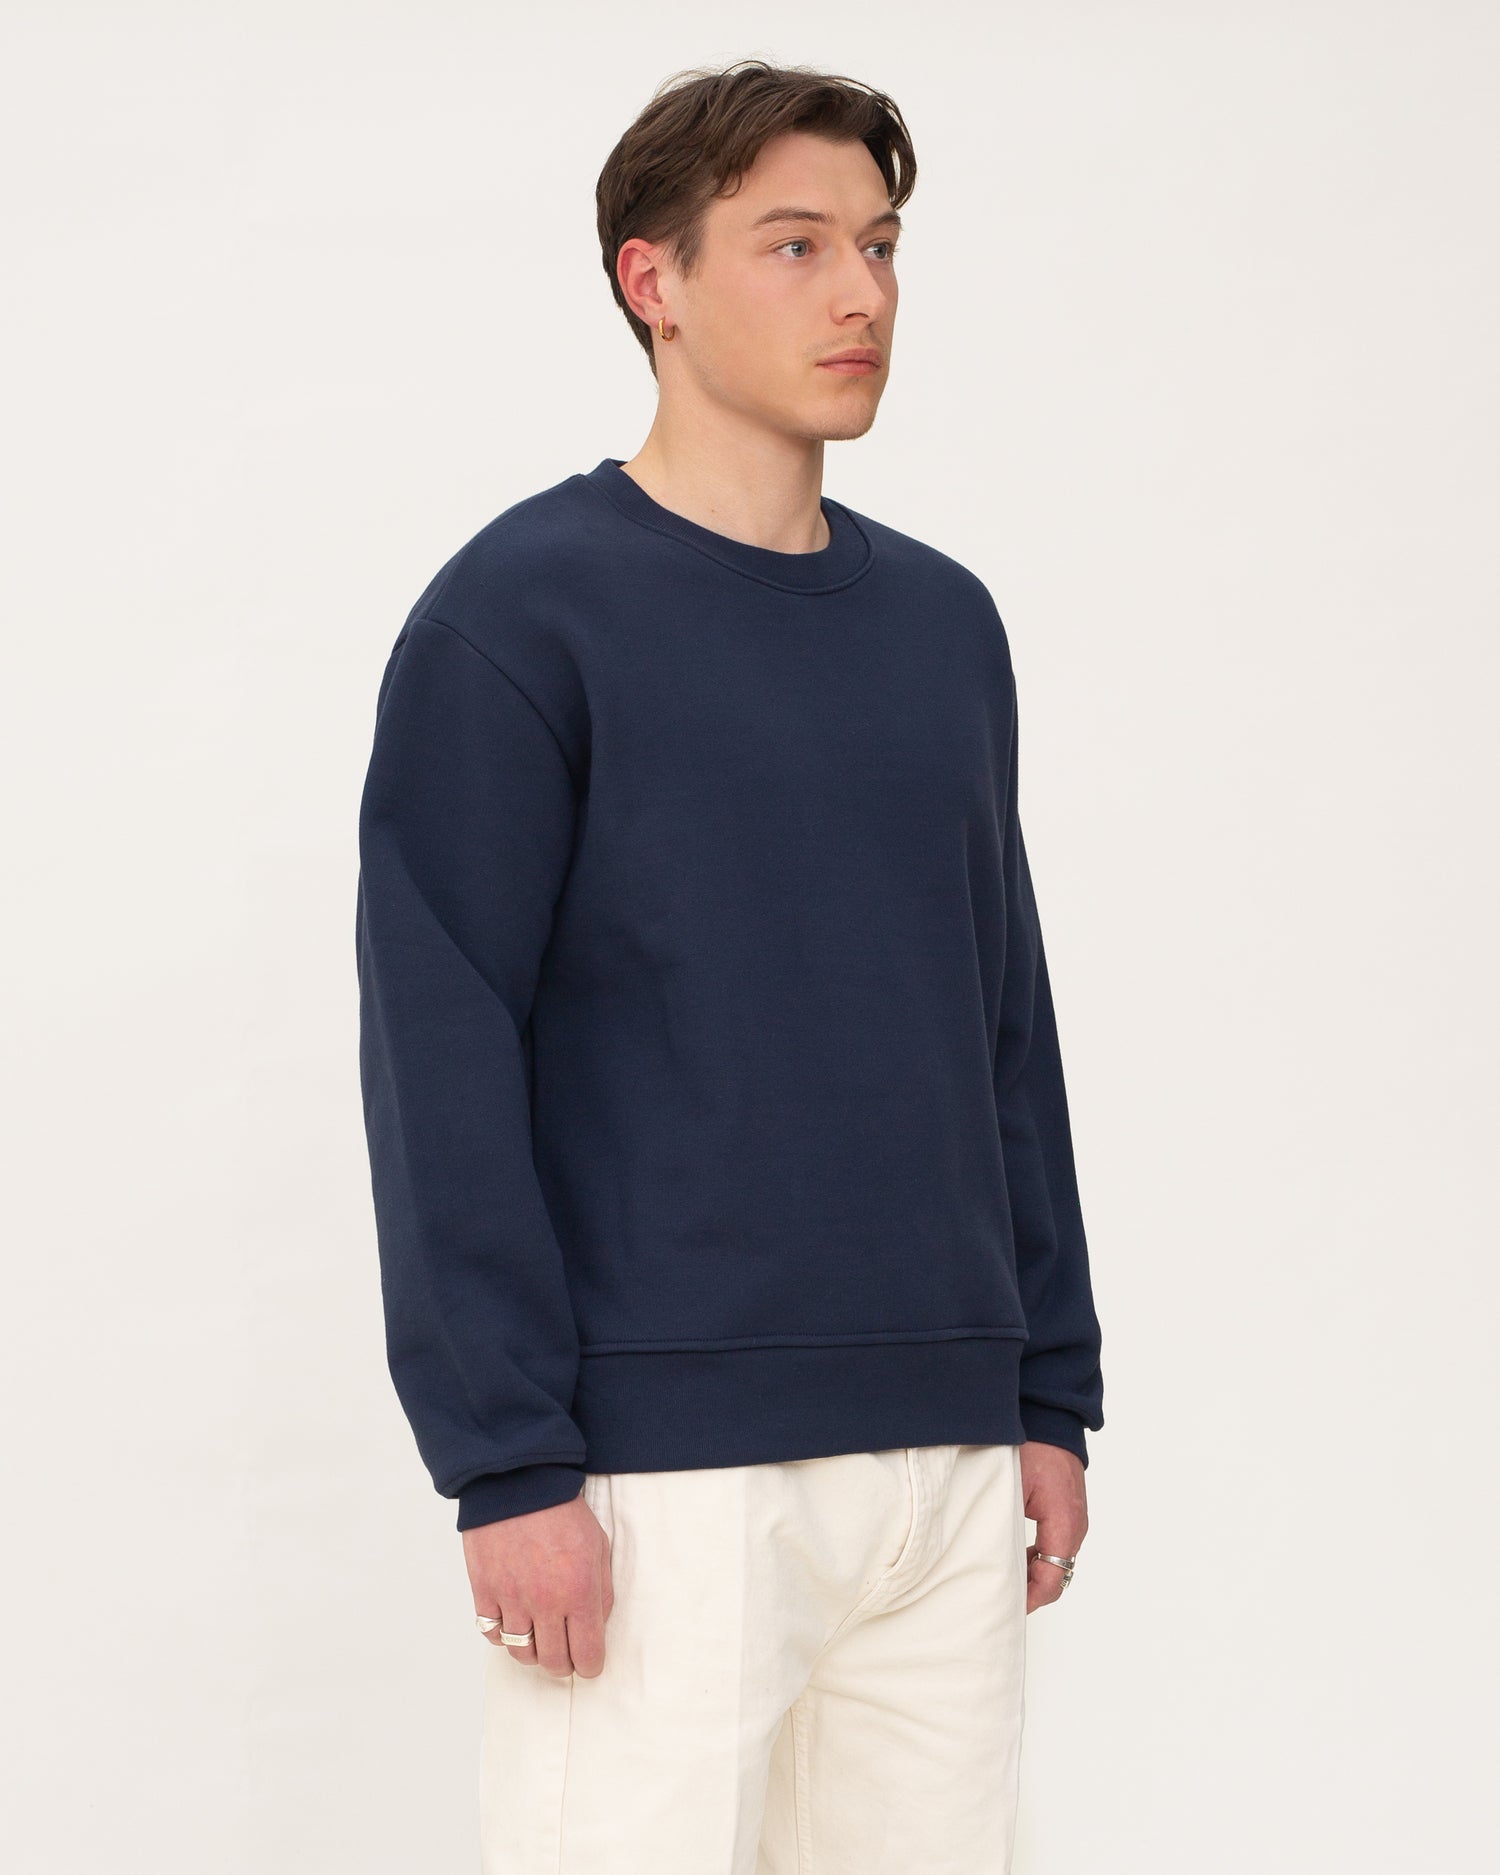 mens designer sweatshirts, mens navy sweatshirt, angle side